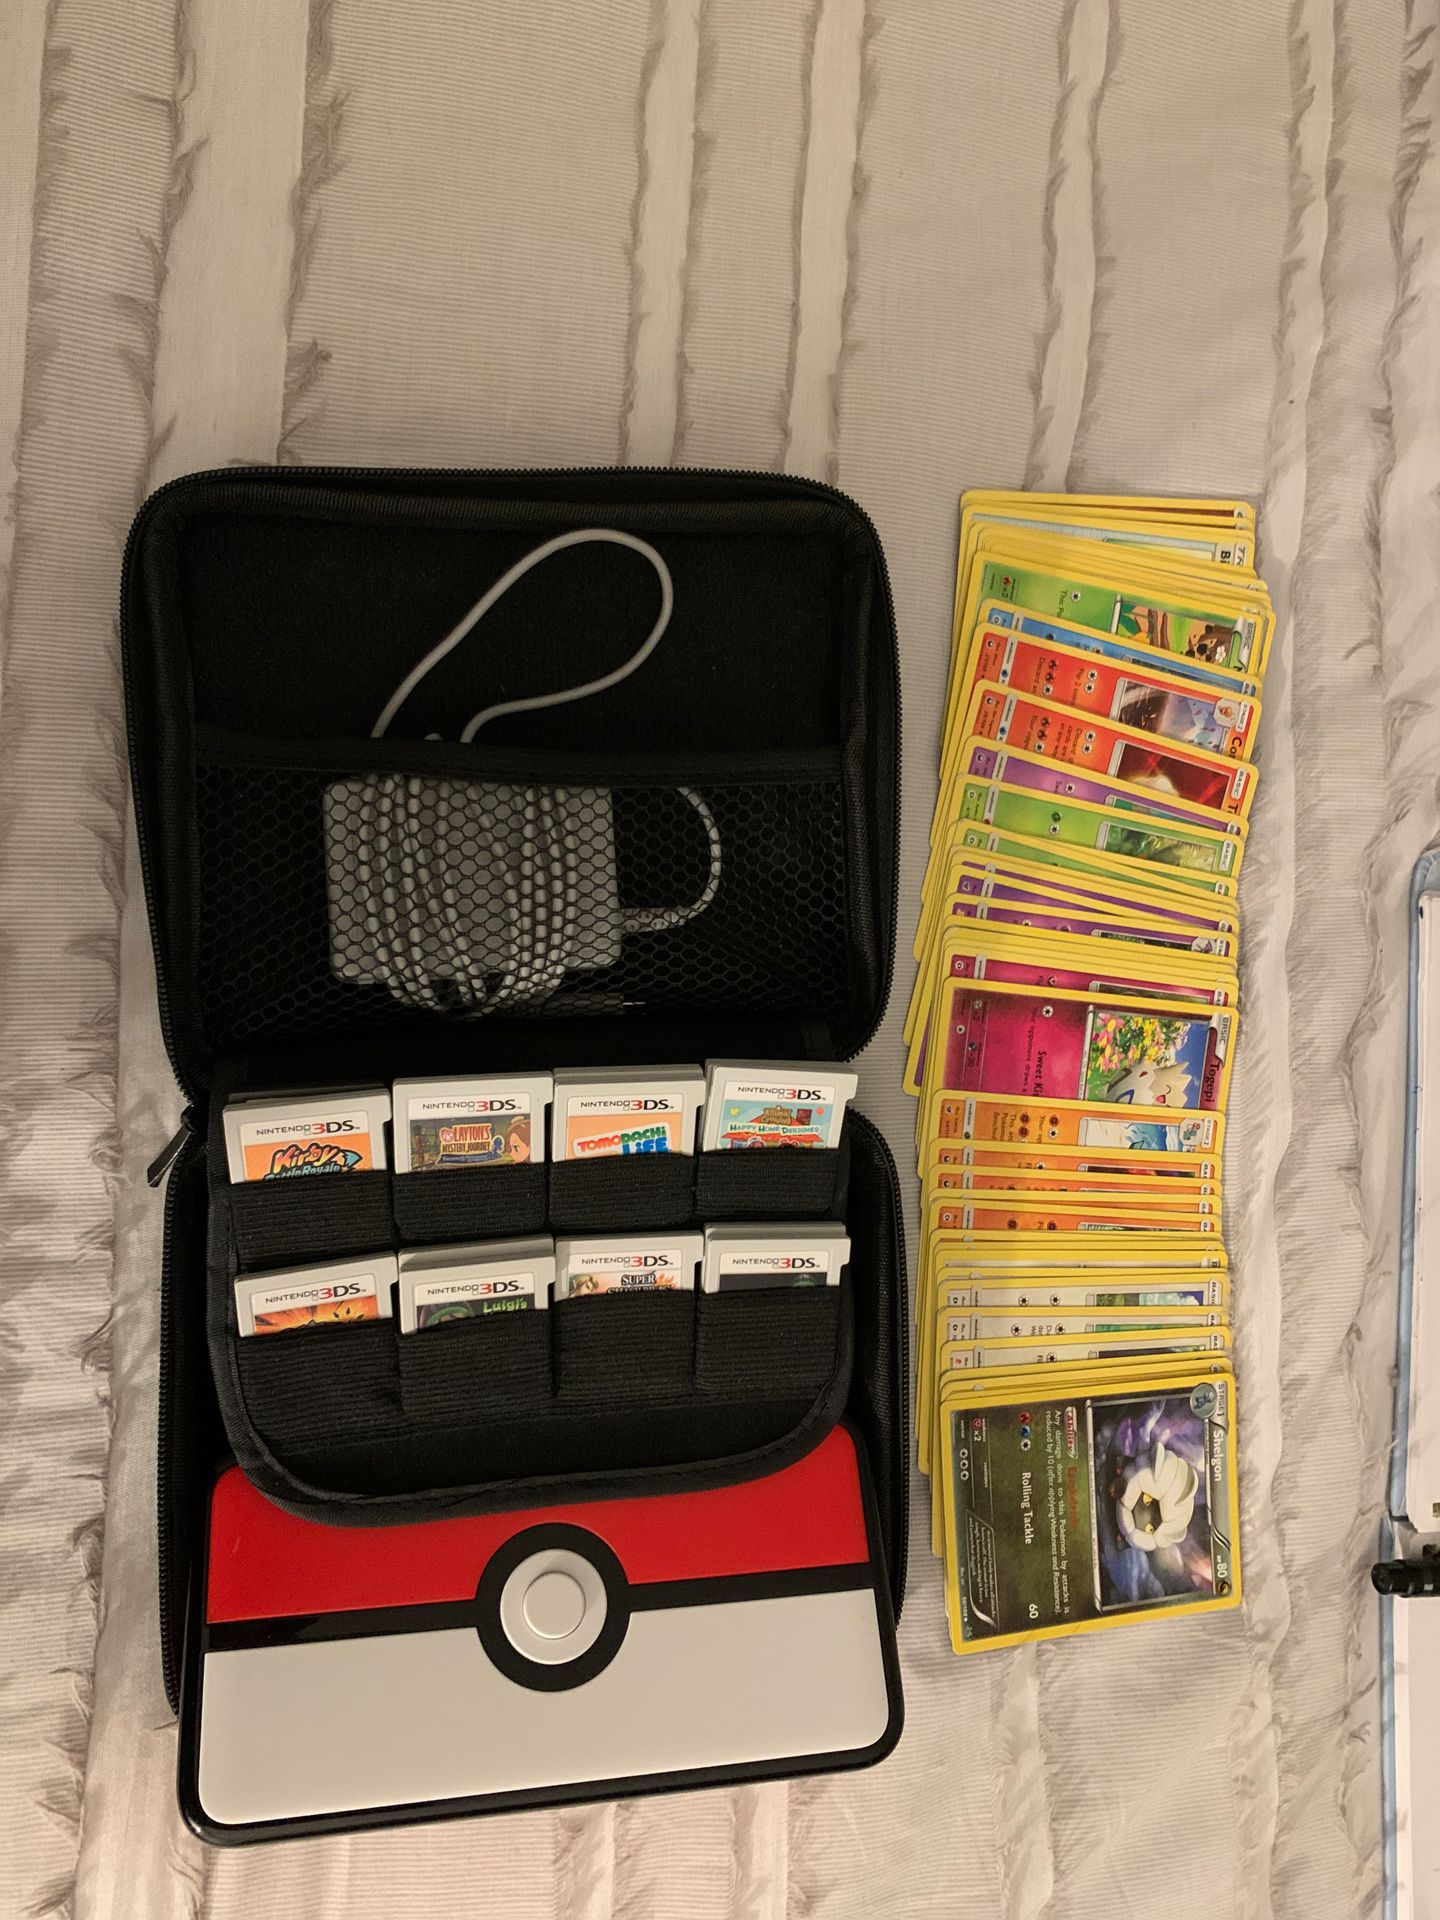 Nintendo 3DS, 14 games, case, and 50 Pokémon cards